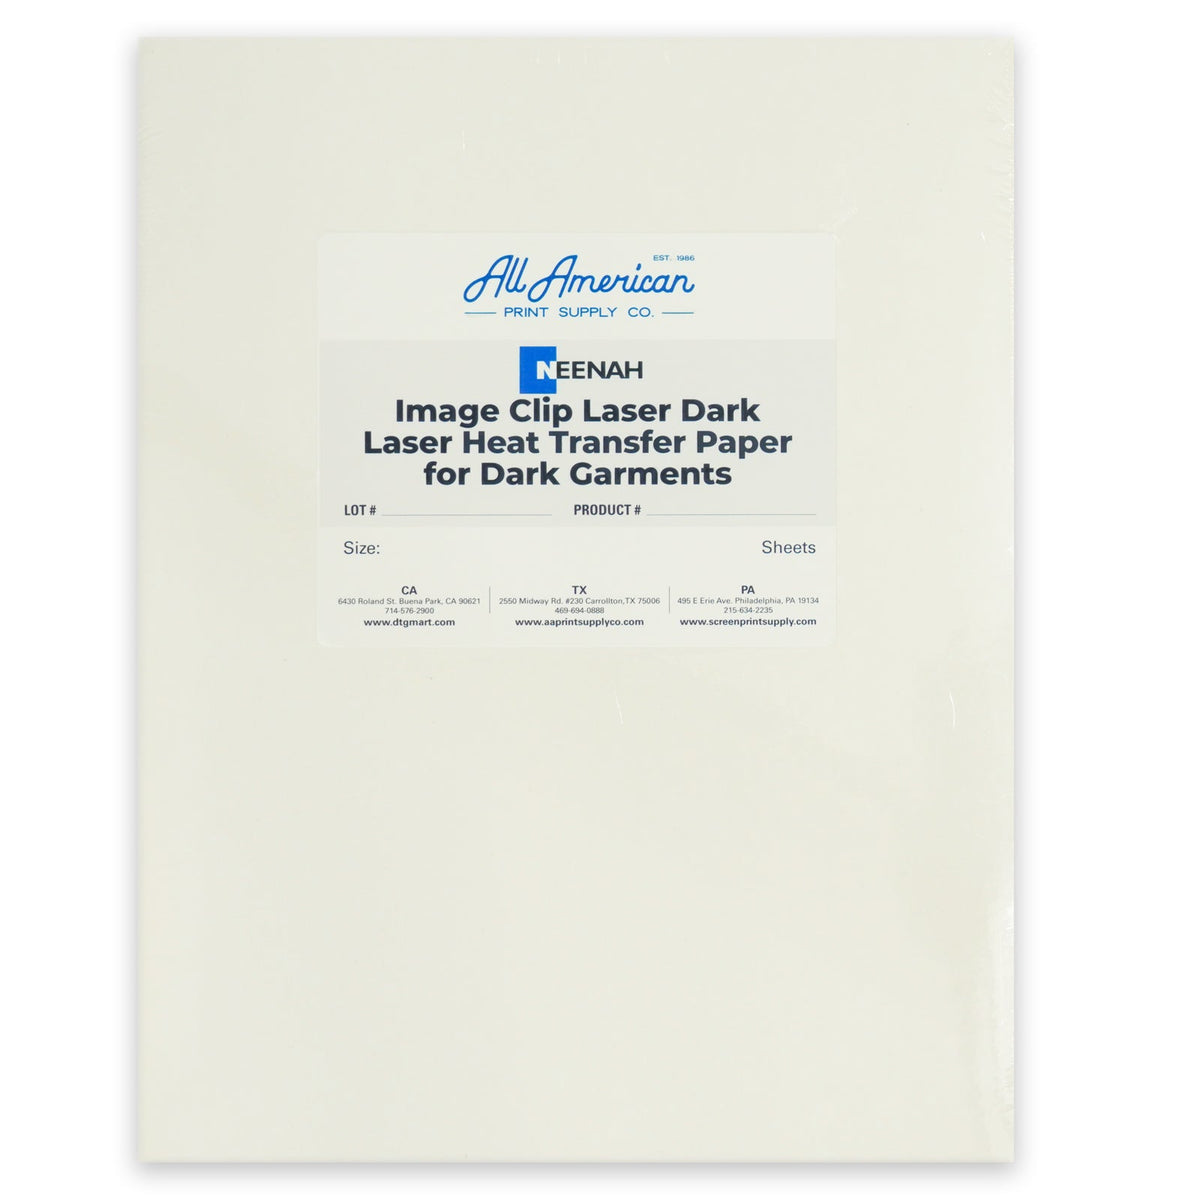 Neenah 3G Jet Opaque Dark Transfer Paper 8.5 x 11 (100 Sheets